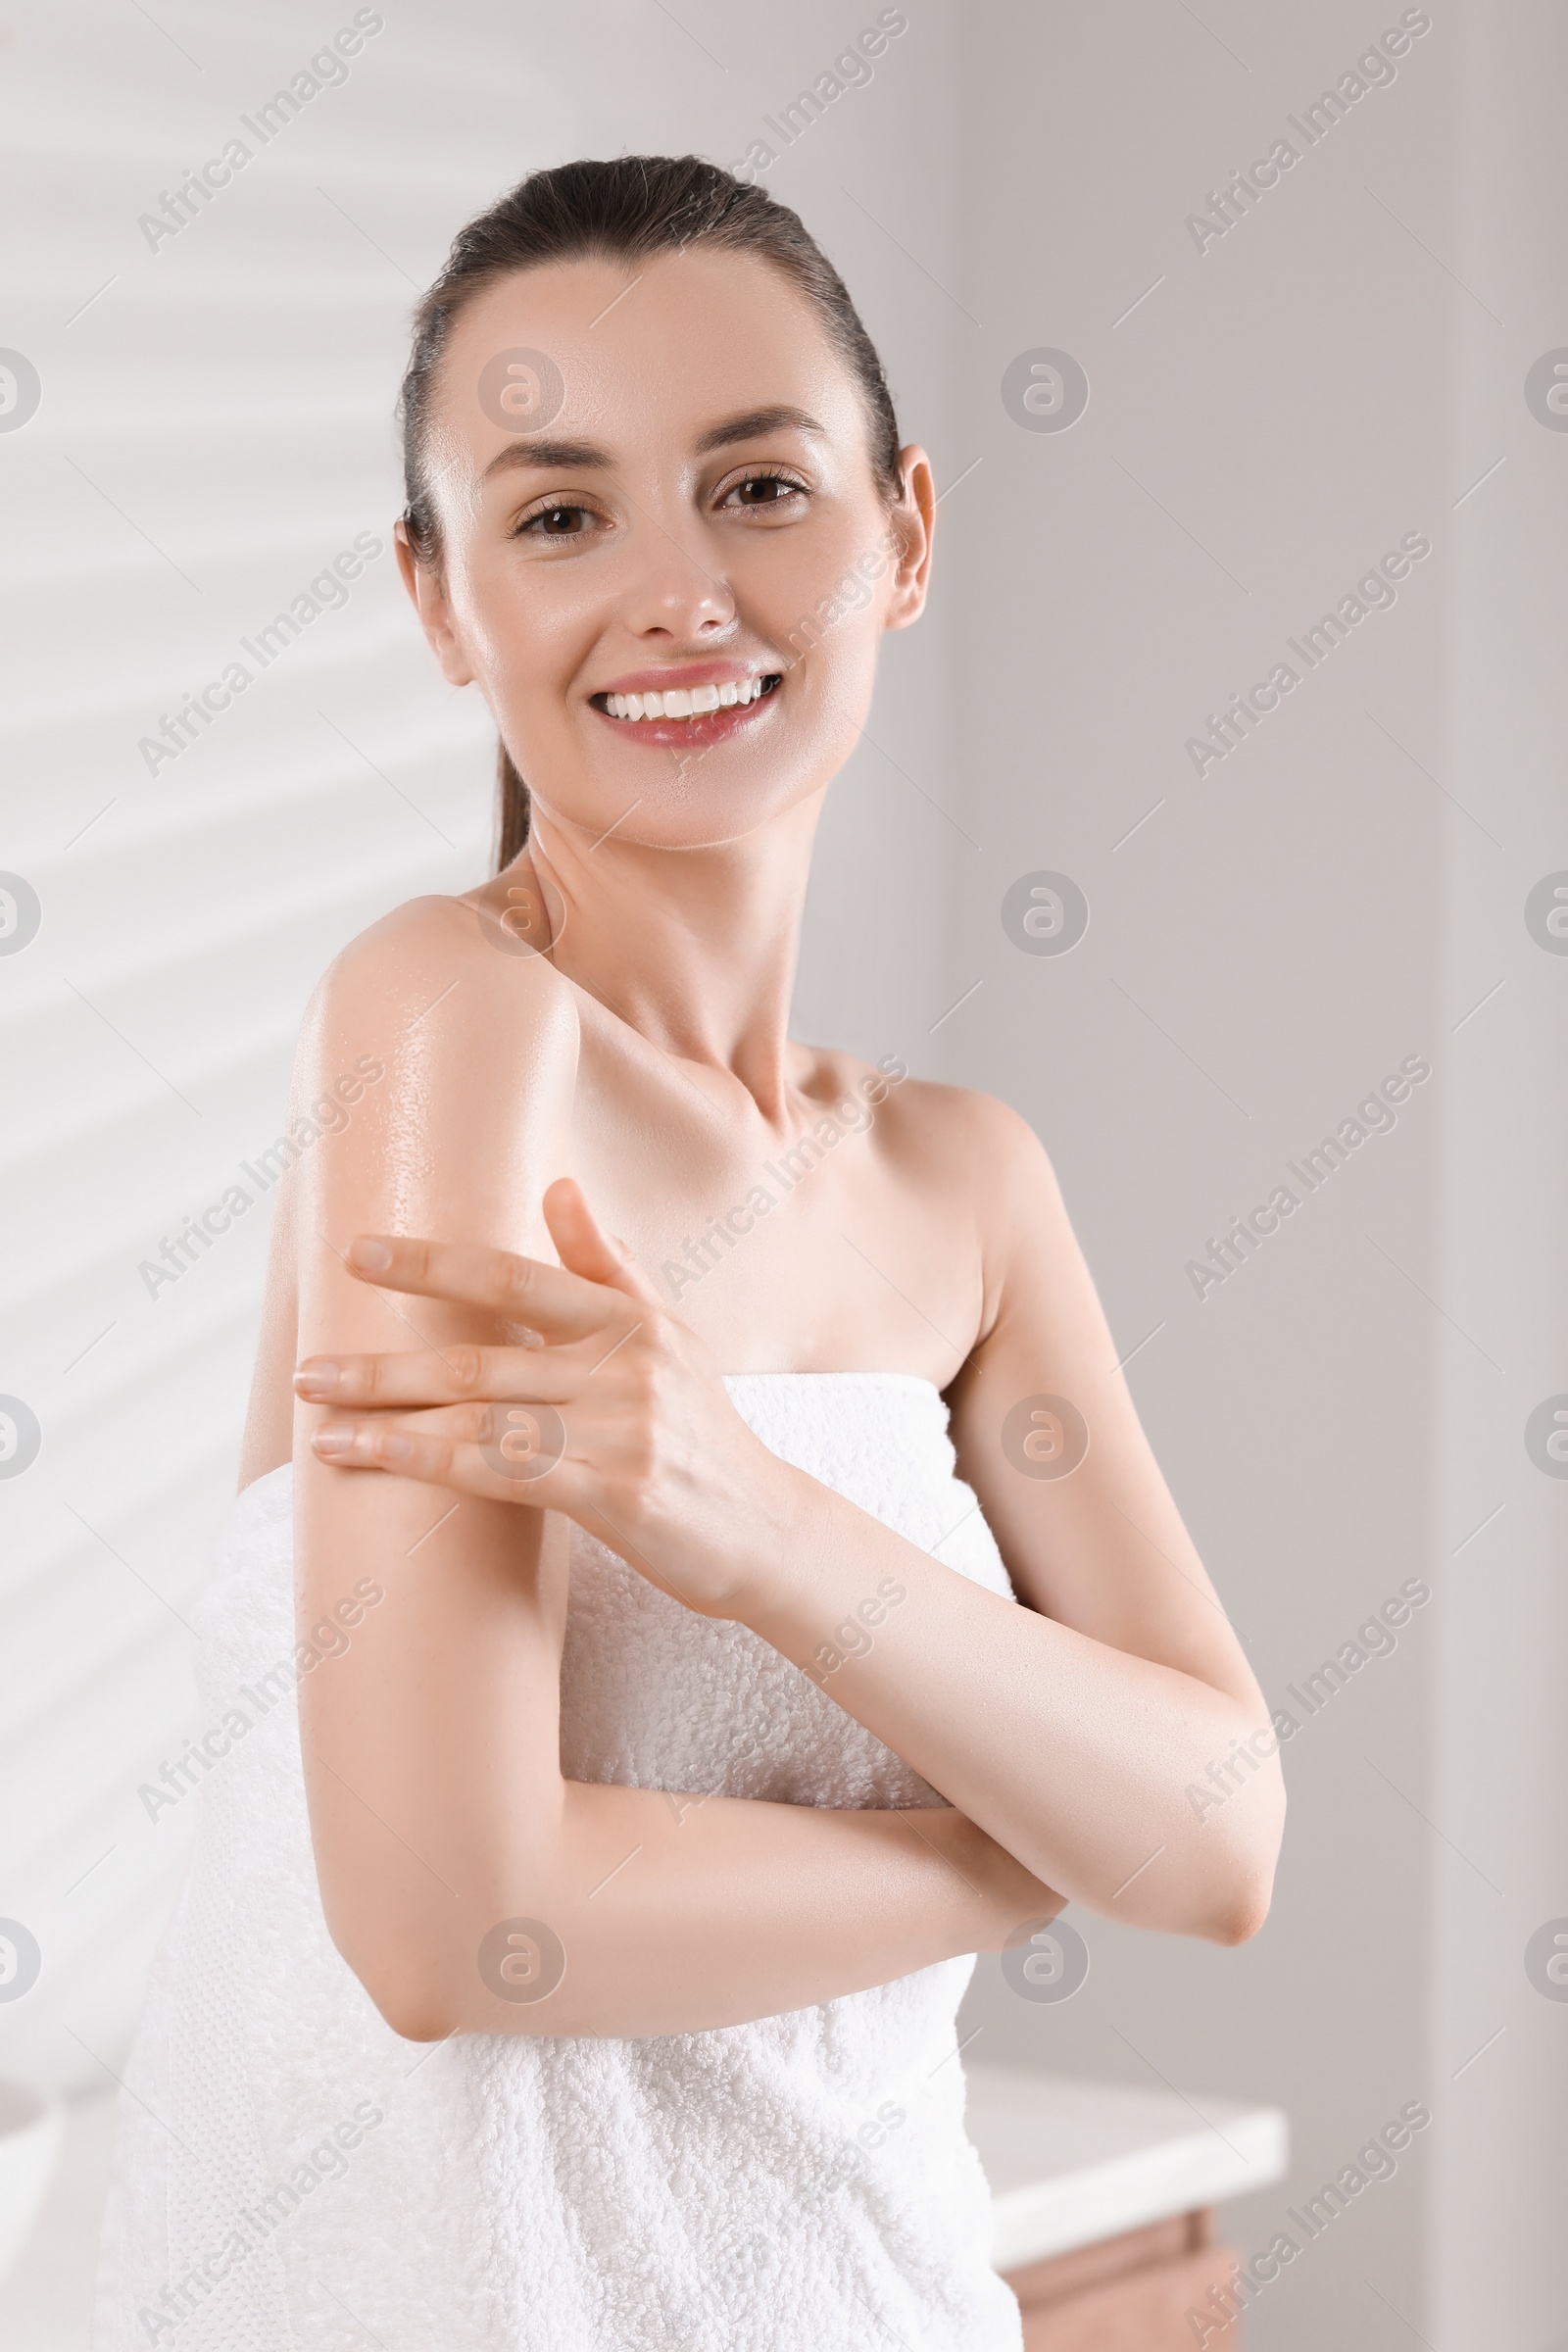 Photo of Happy woman applying body oil onto arm in bathroom